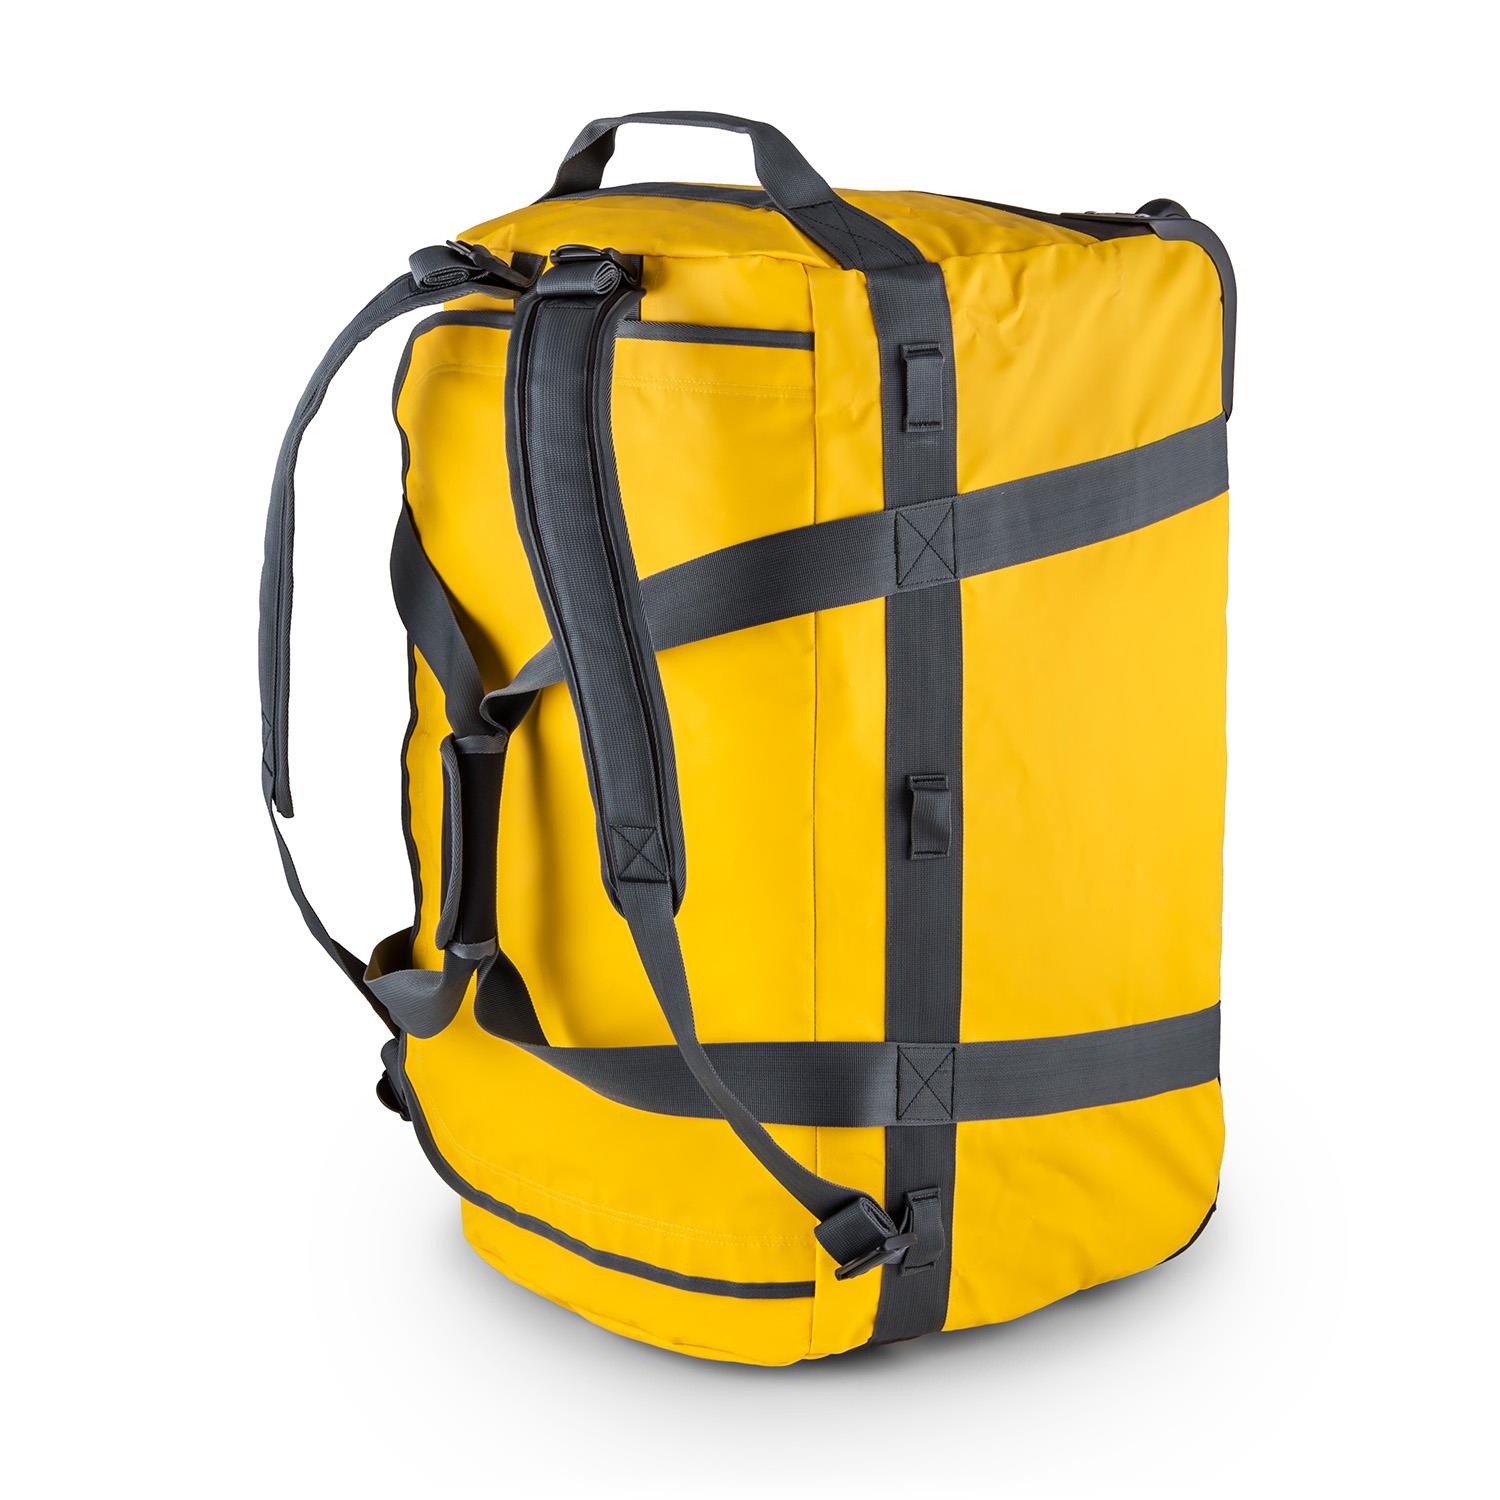 Newest Design Custom Gym Sport Tote Rolling Duffel Bags Wheeled Travel Trolley Luggage Bags